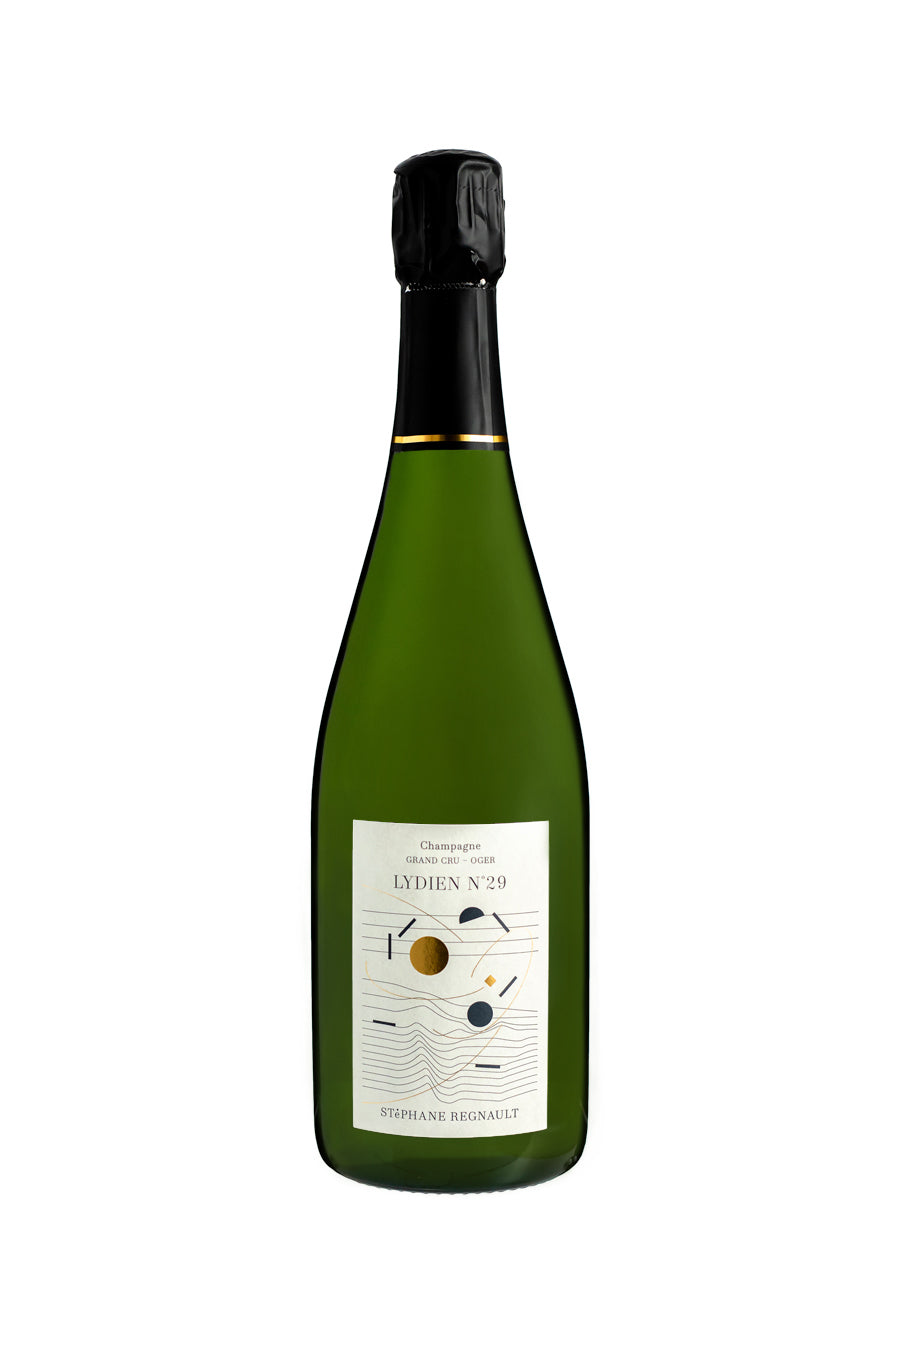 Champagne Stéphane Regnault, Grand Cru 'Lydien' No 29